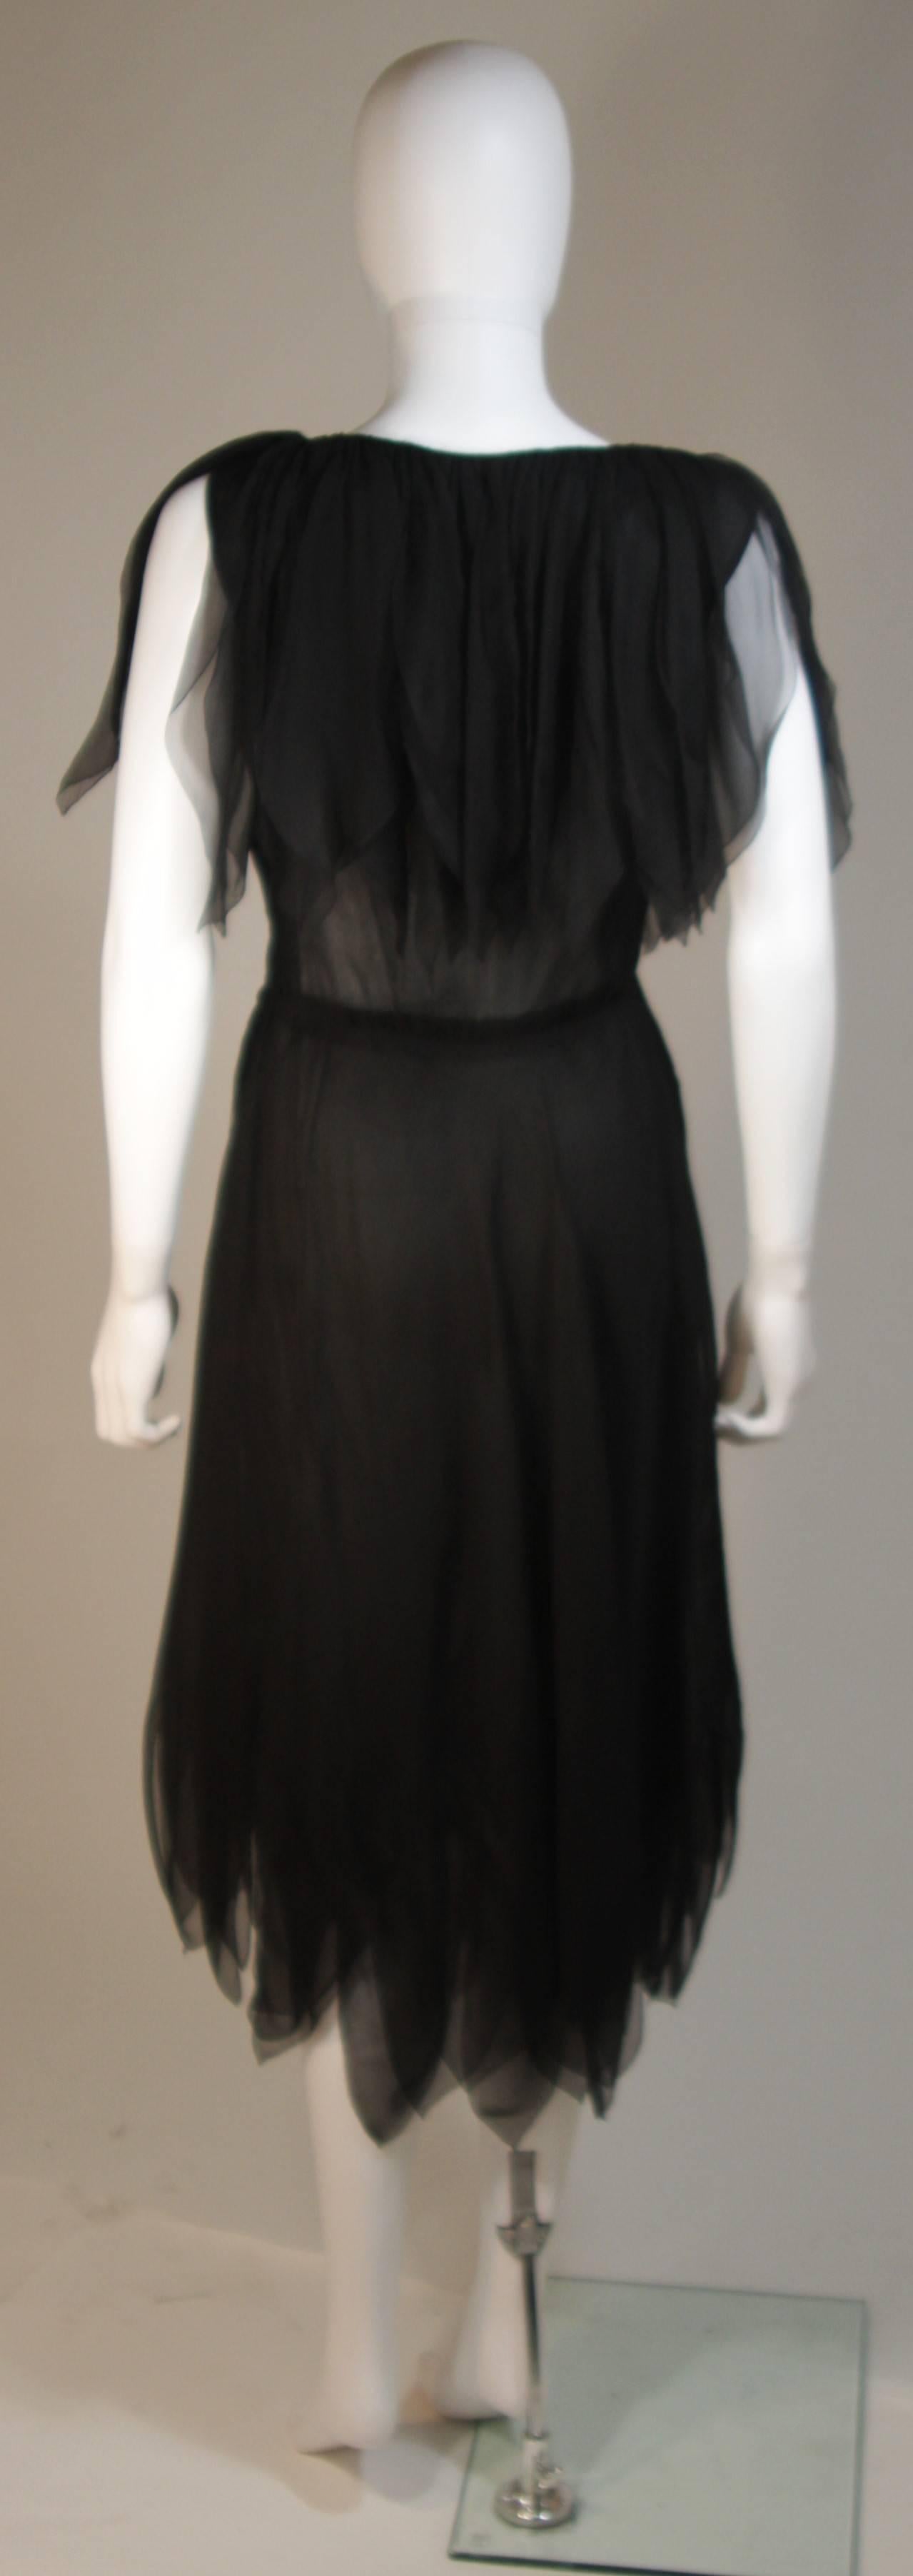 CHRISTIAN DIOR COUTURE Layered Black Silk Chiffon Cocktail Dress Size 4-6 4